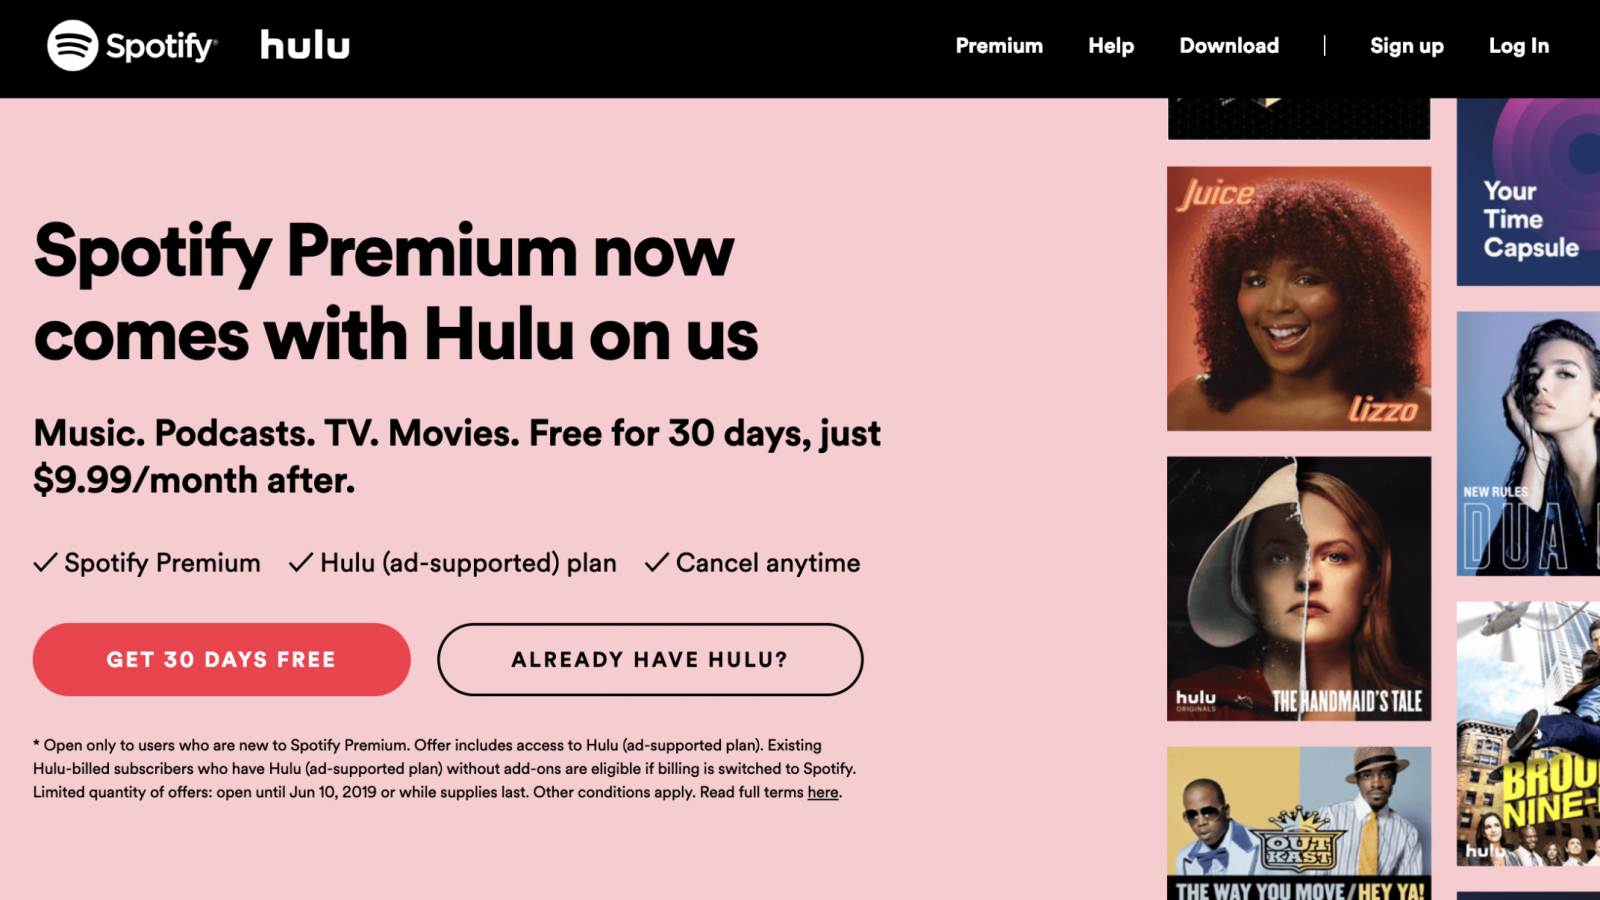 Do Spotify Users Get To Keep Hulu Free